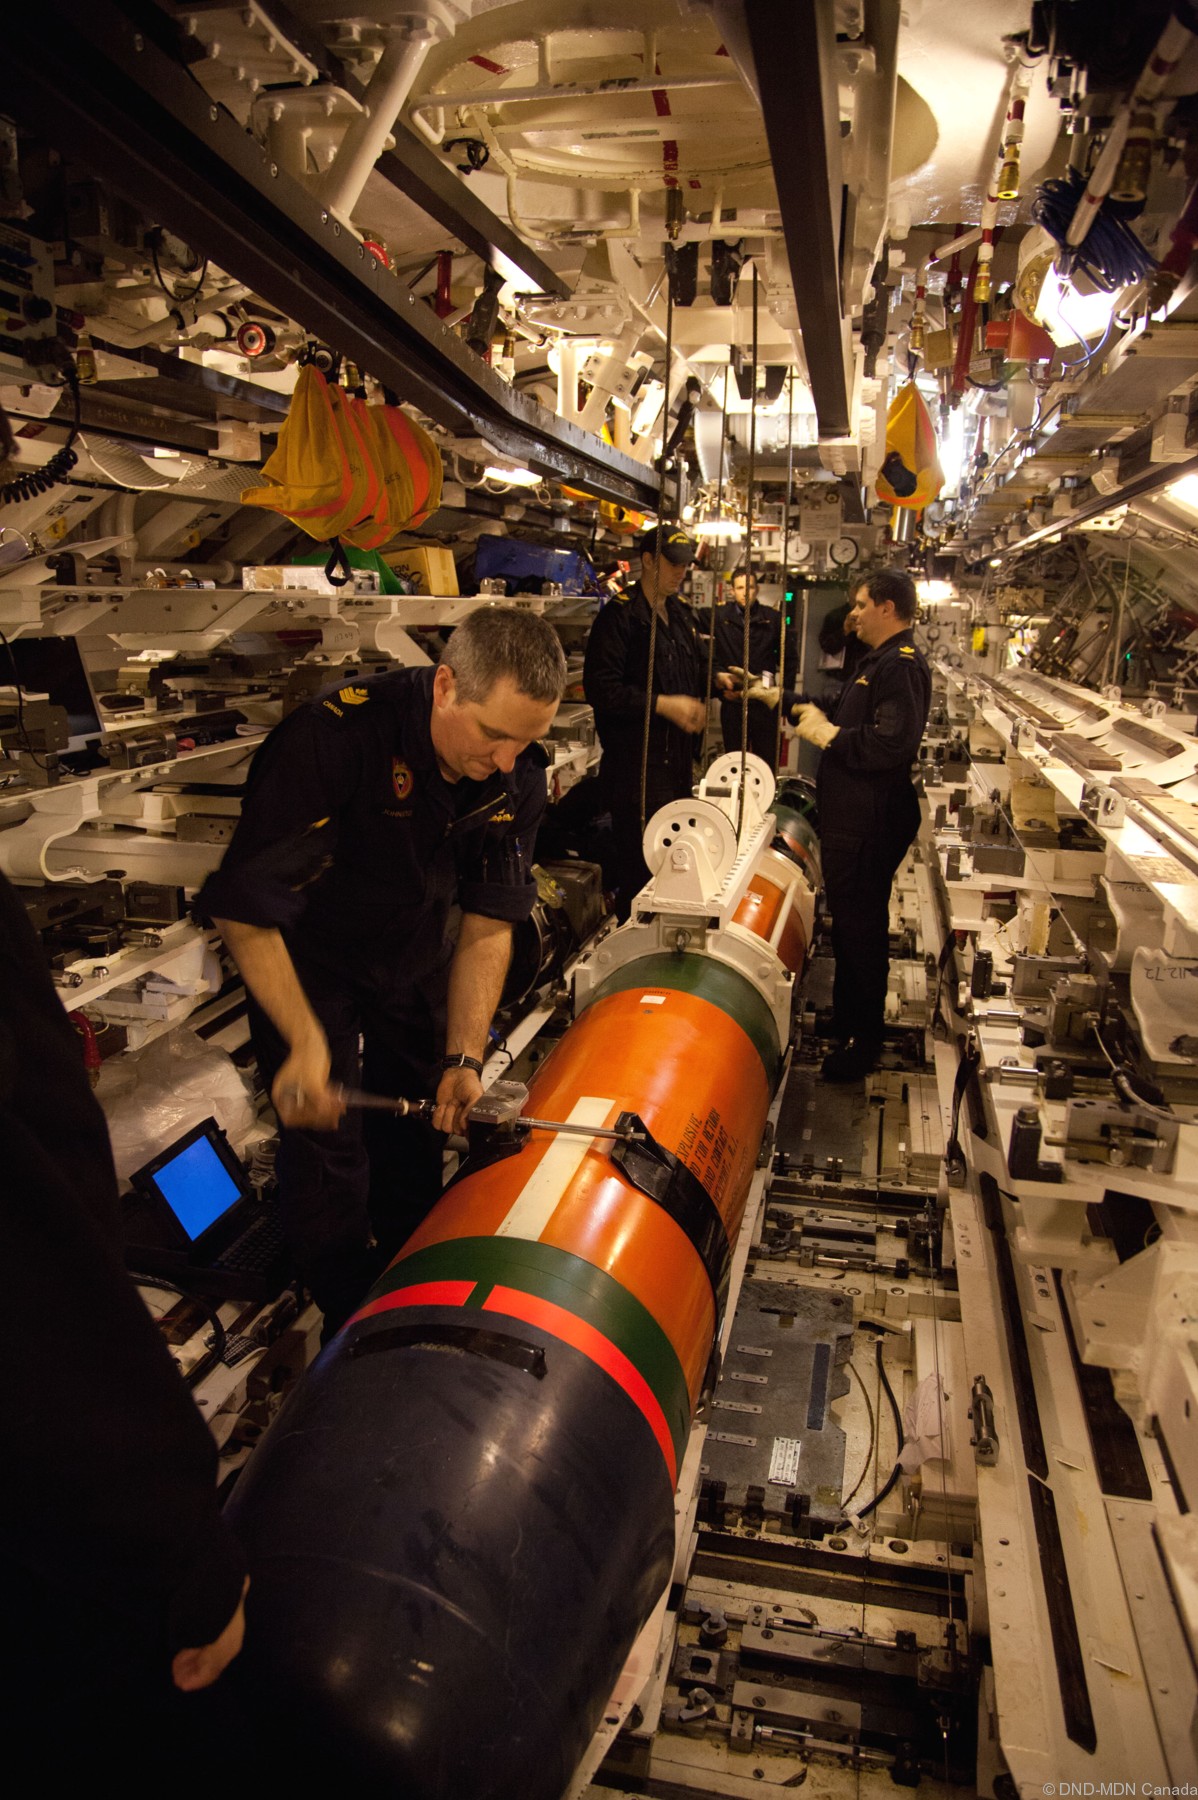 victoria class patrol submarine ssk hunter killer upholder royal canadian navy hmcs ncsm 02 mk.48 torpedo